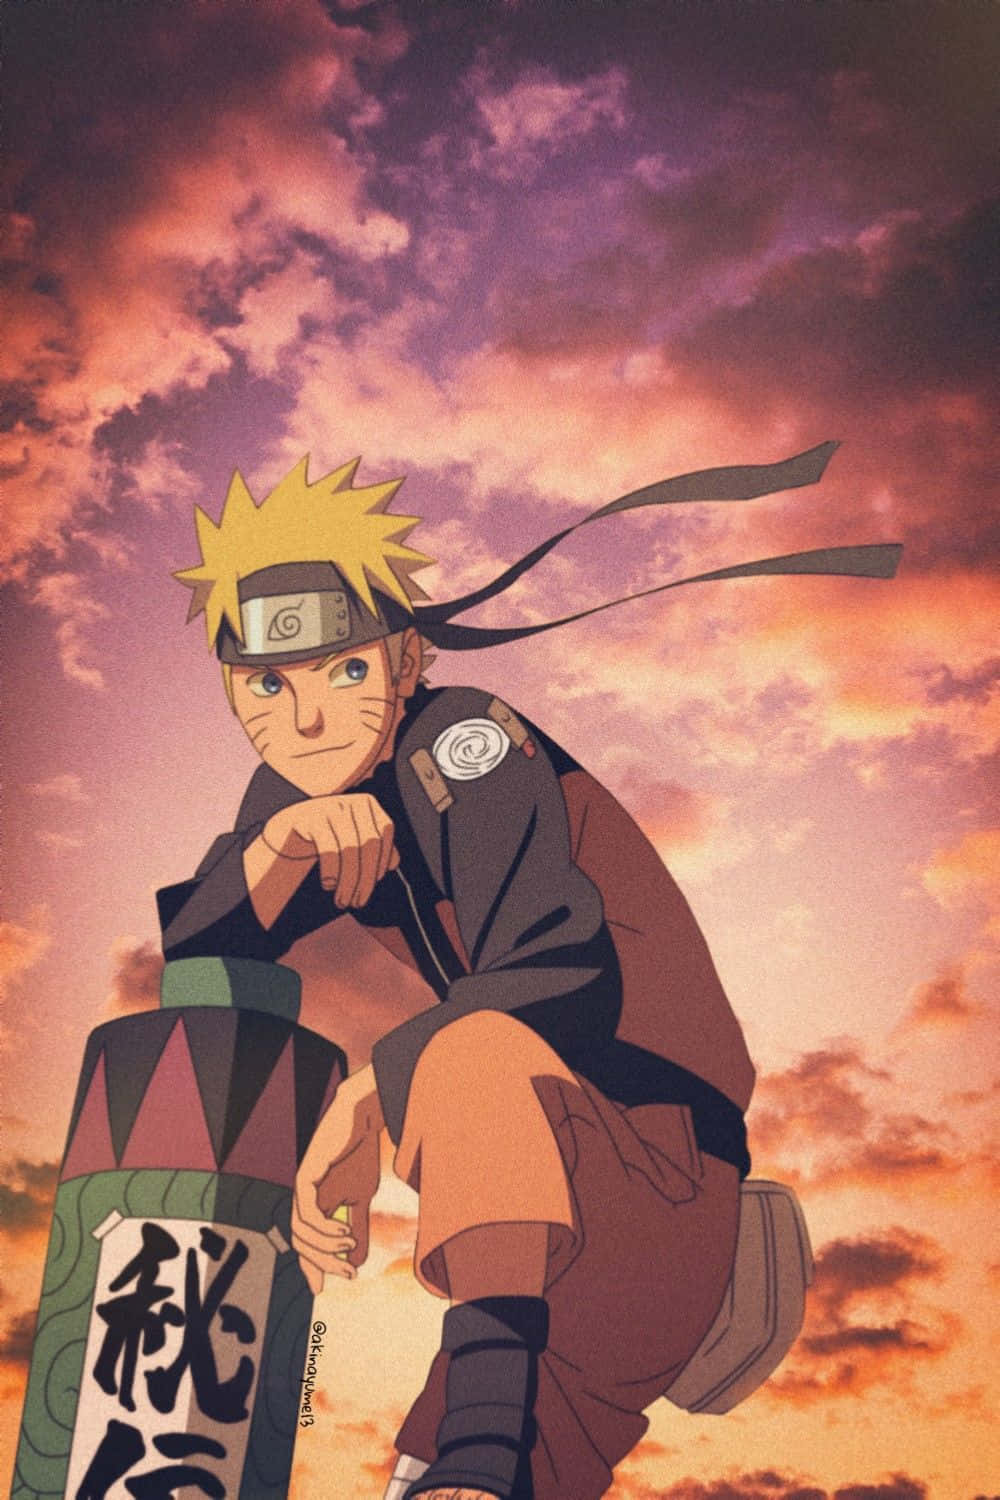 Aesthetic Naruto Wallpaper - Cool Anime Wallpaper with Naruto